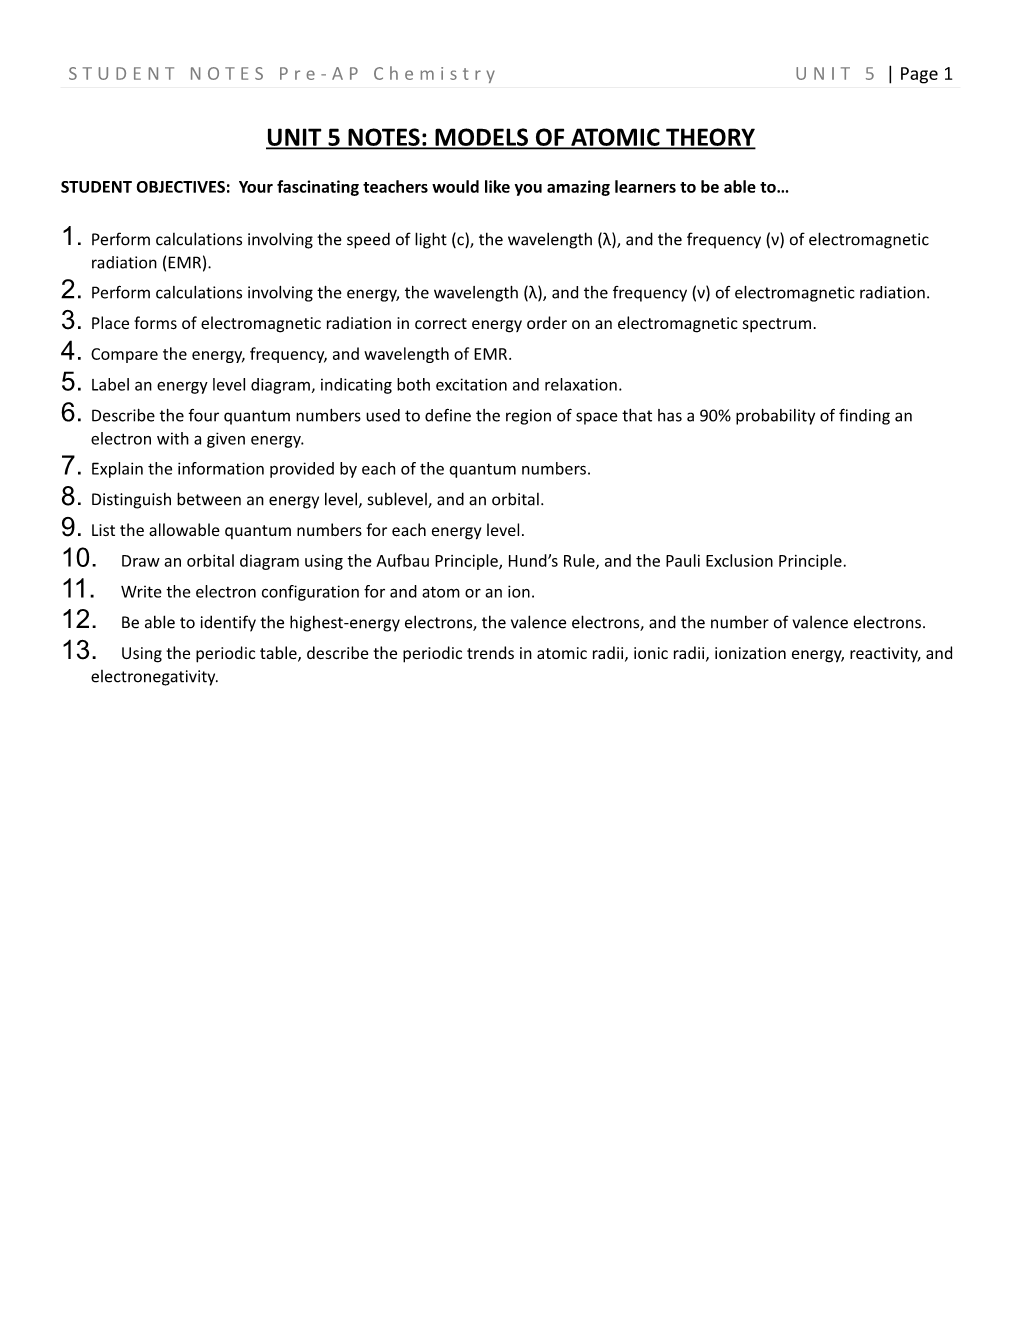 STUDENT NOTES Pre-AP Chemistry UNIT 5 Page 1